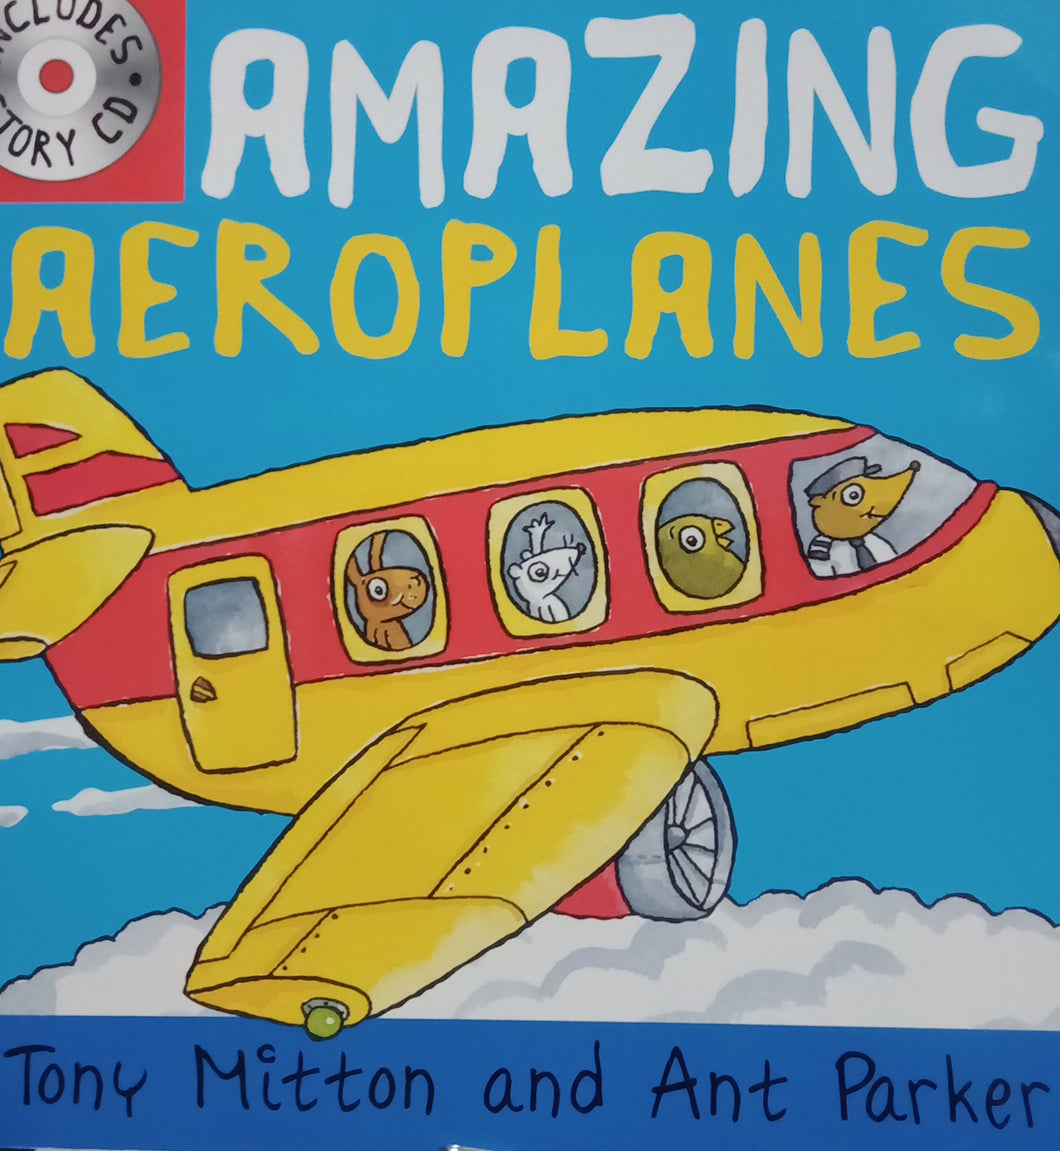 Amazing Aeroplanes by Toni Mitton